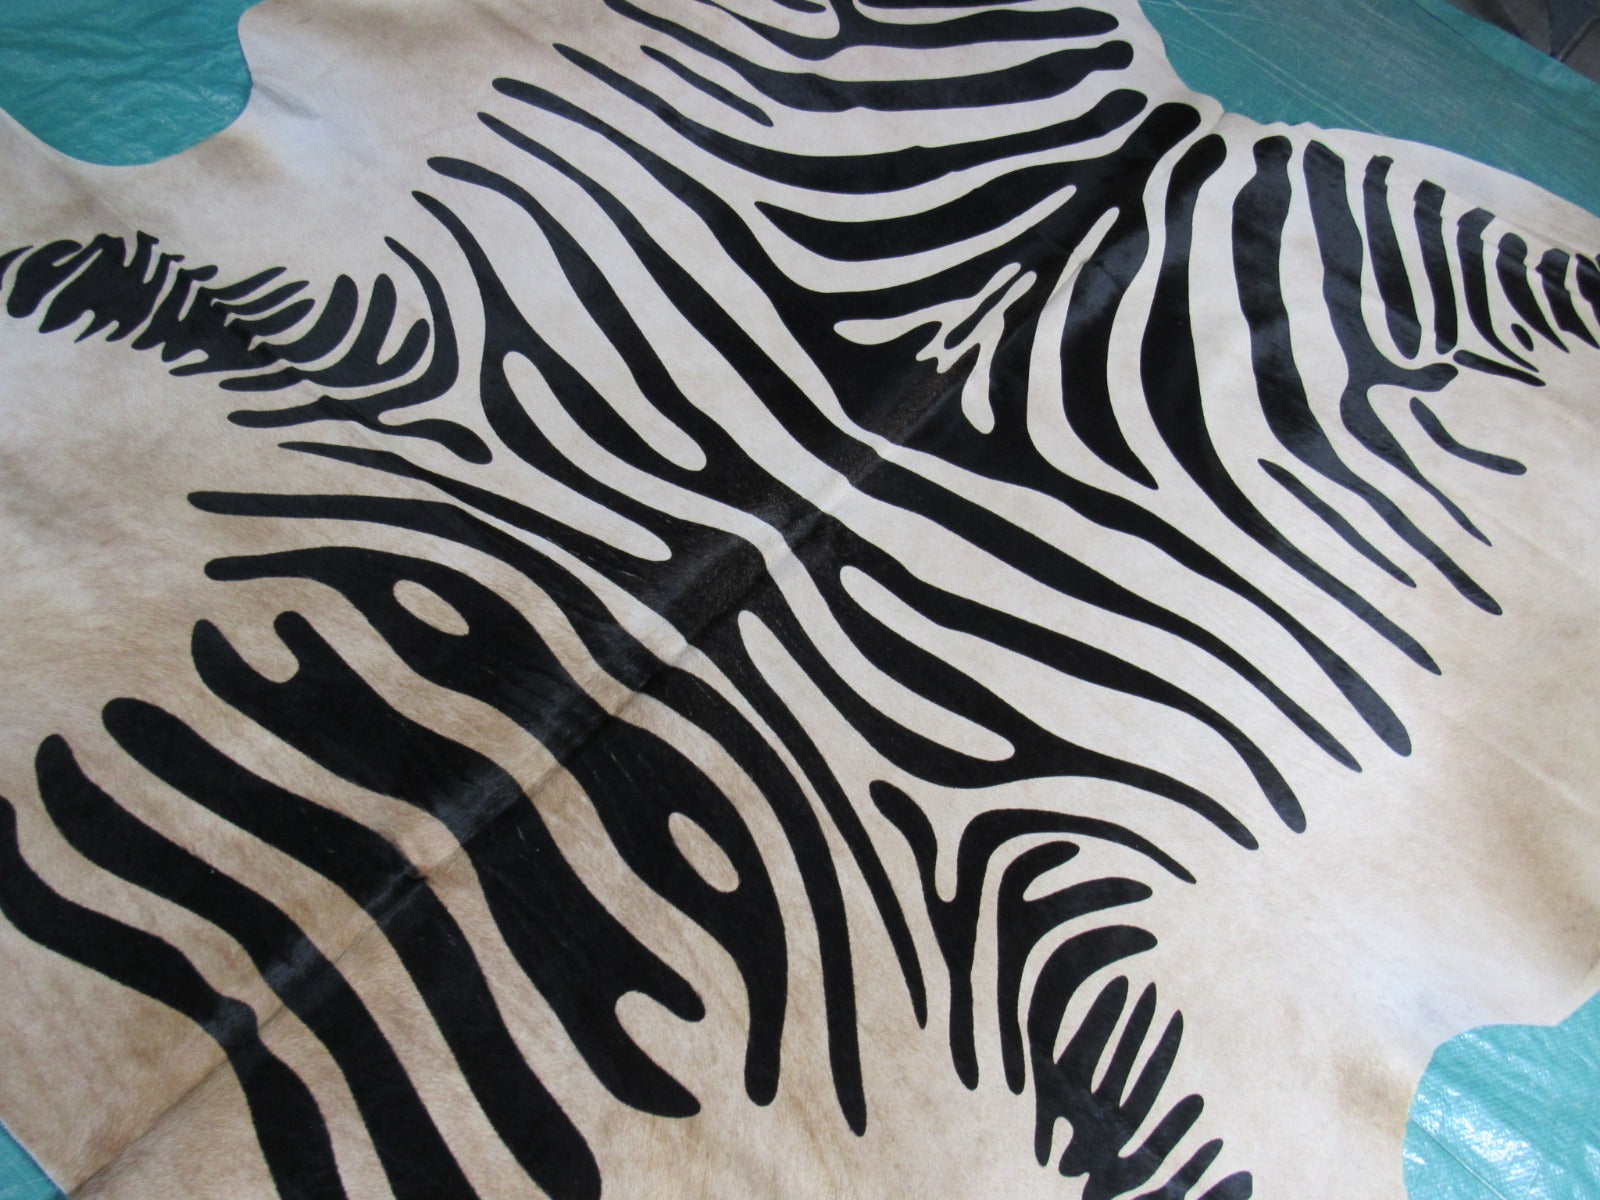 Beige Zebra Print Cowhide Rug (Dark Brown Stripes) Size: 7x6 feet C-1552